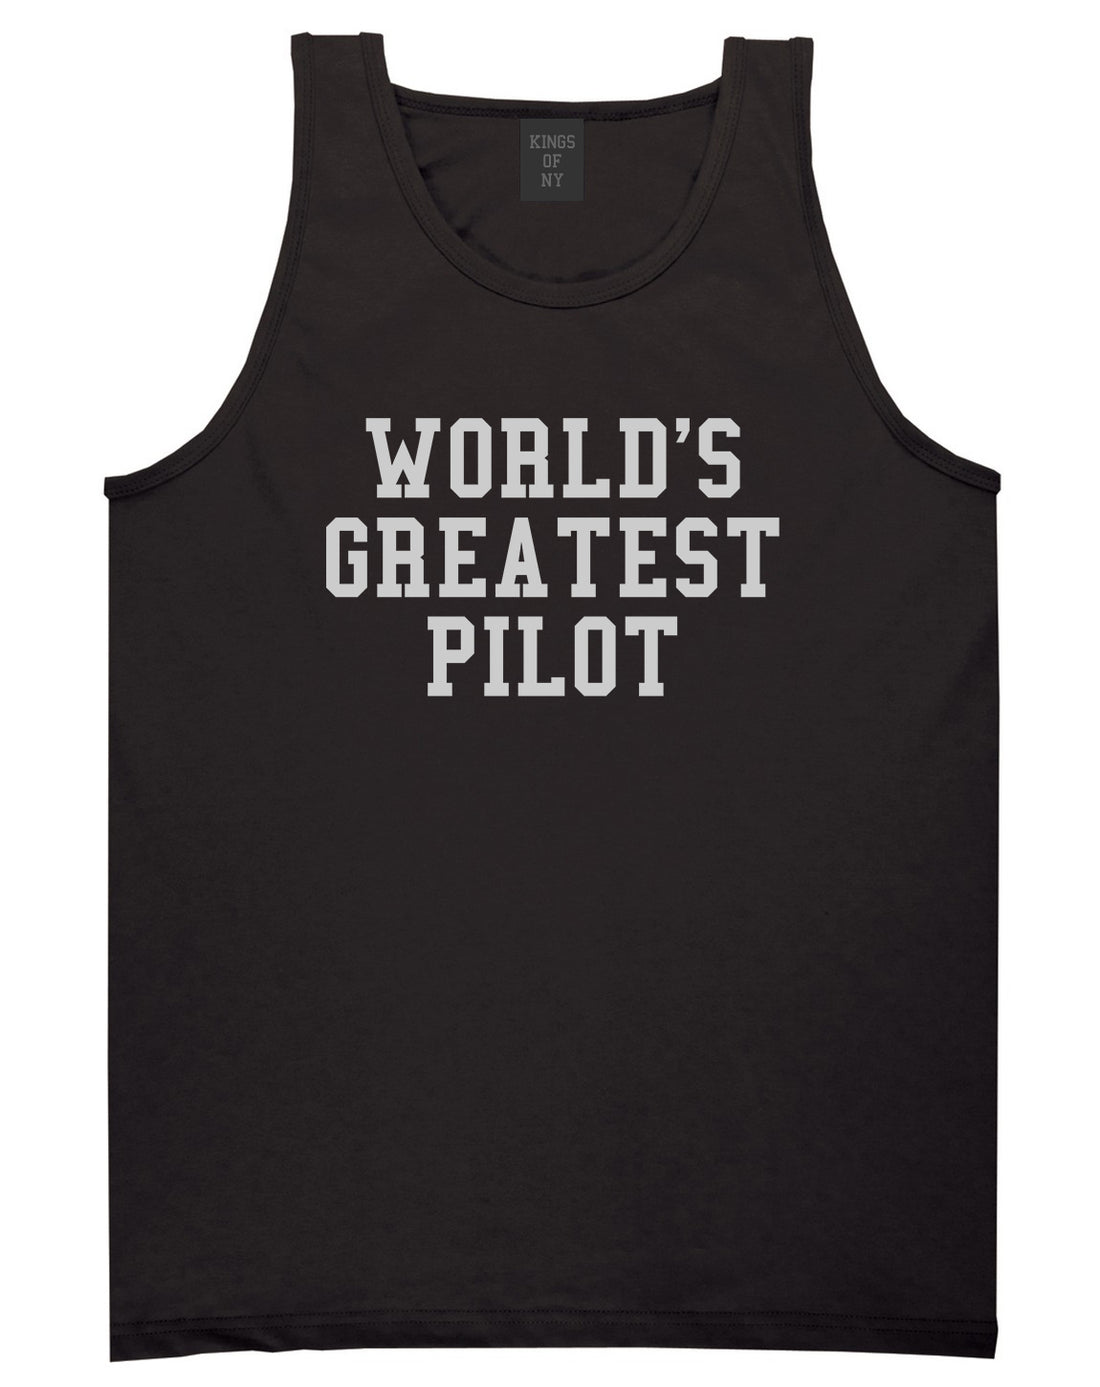 Worlds Greatest Pilot Mens Tank Top T-Shirt Black